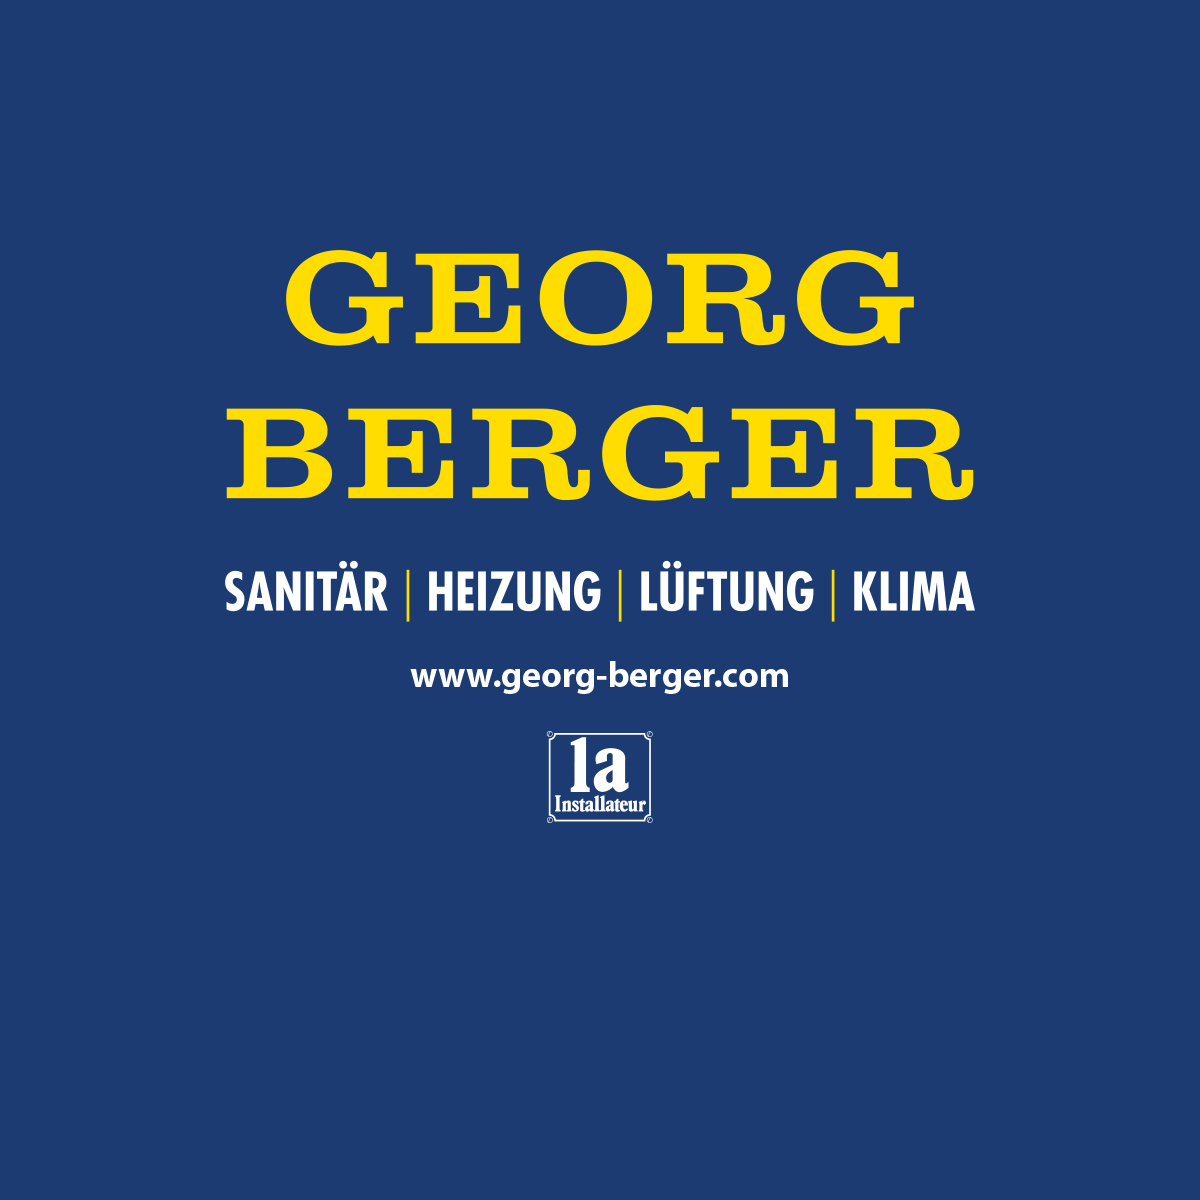 (c) Georg-berger.com